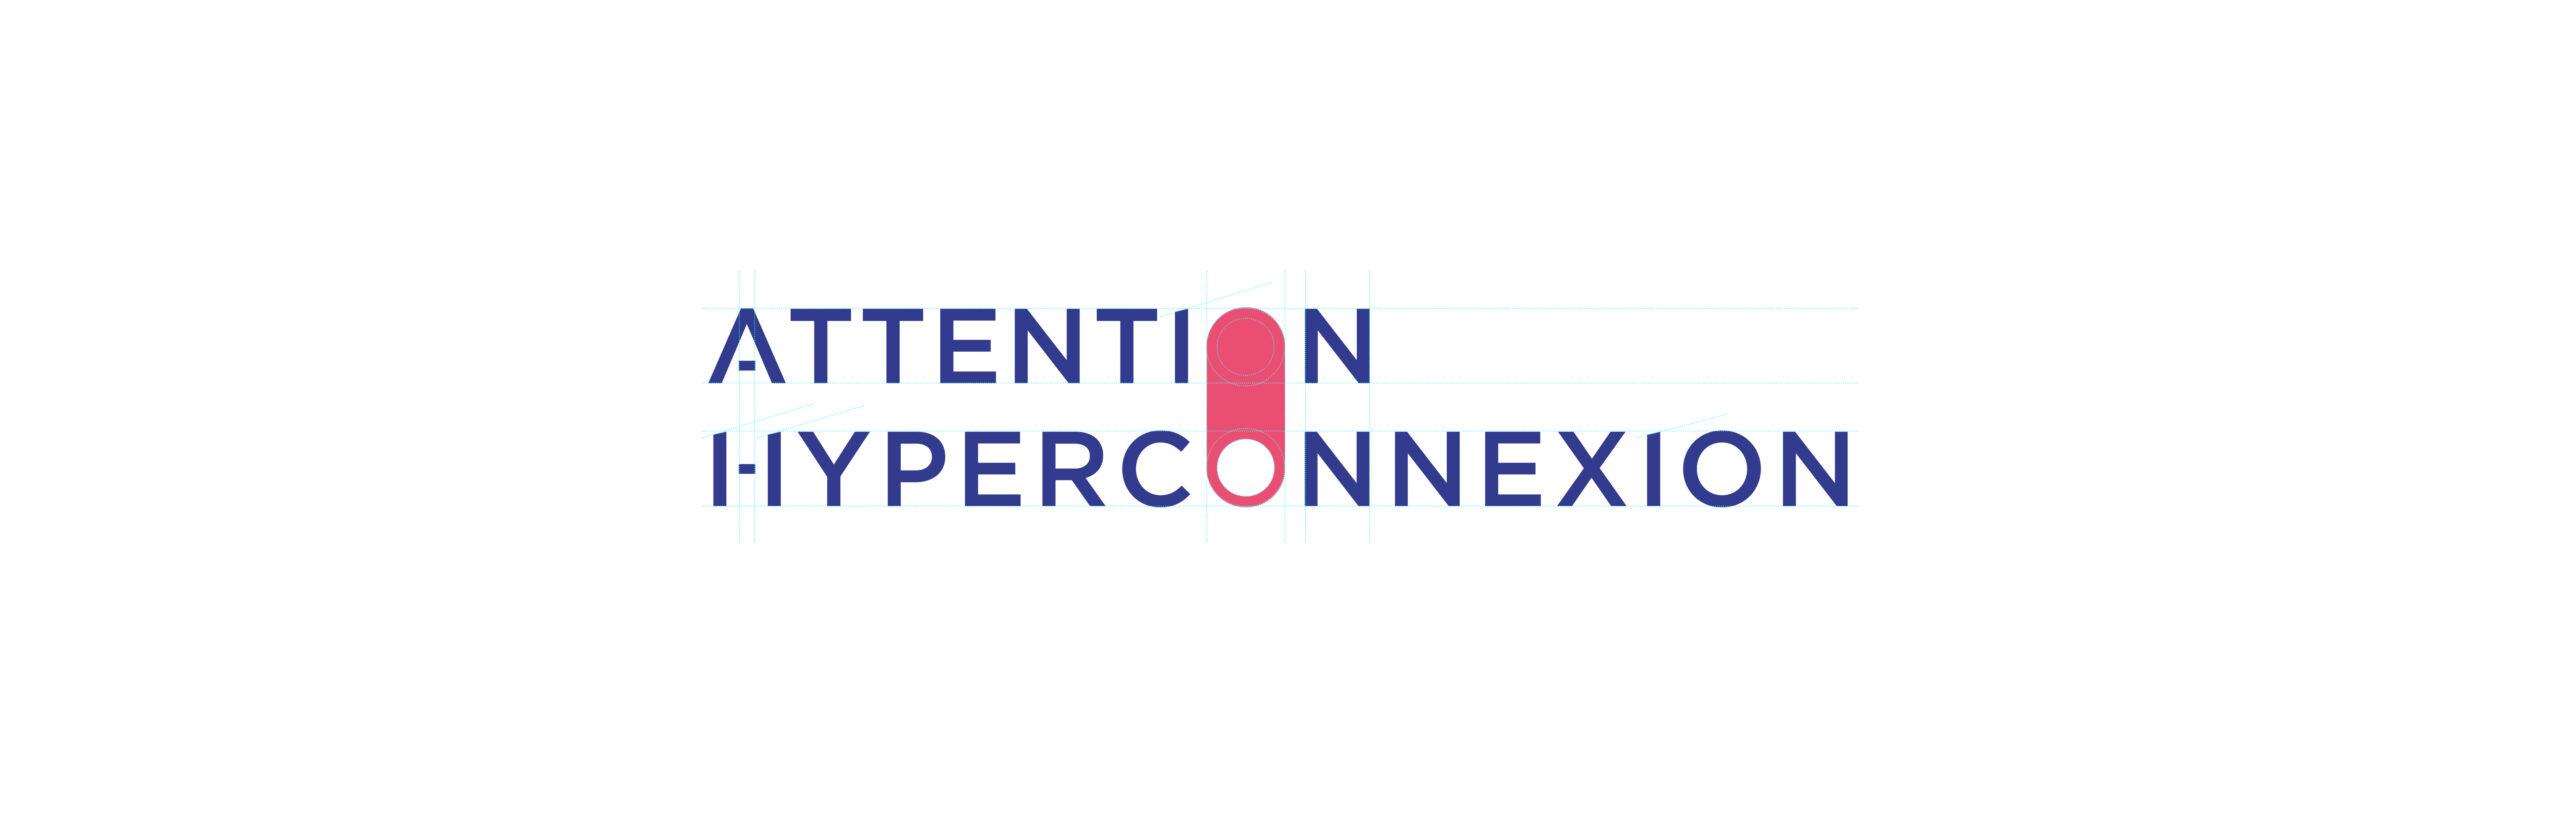 Attention Hyperconnexion logo process